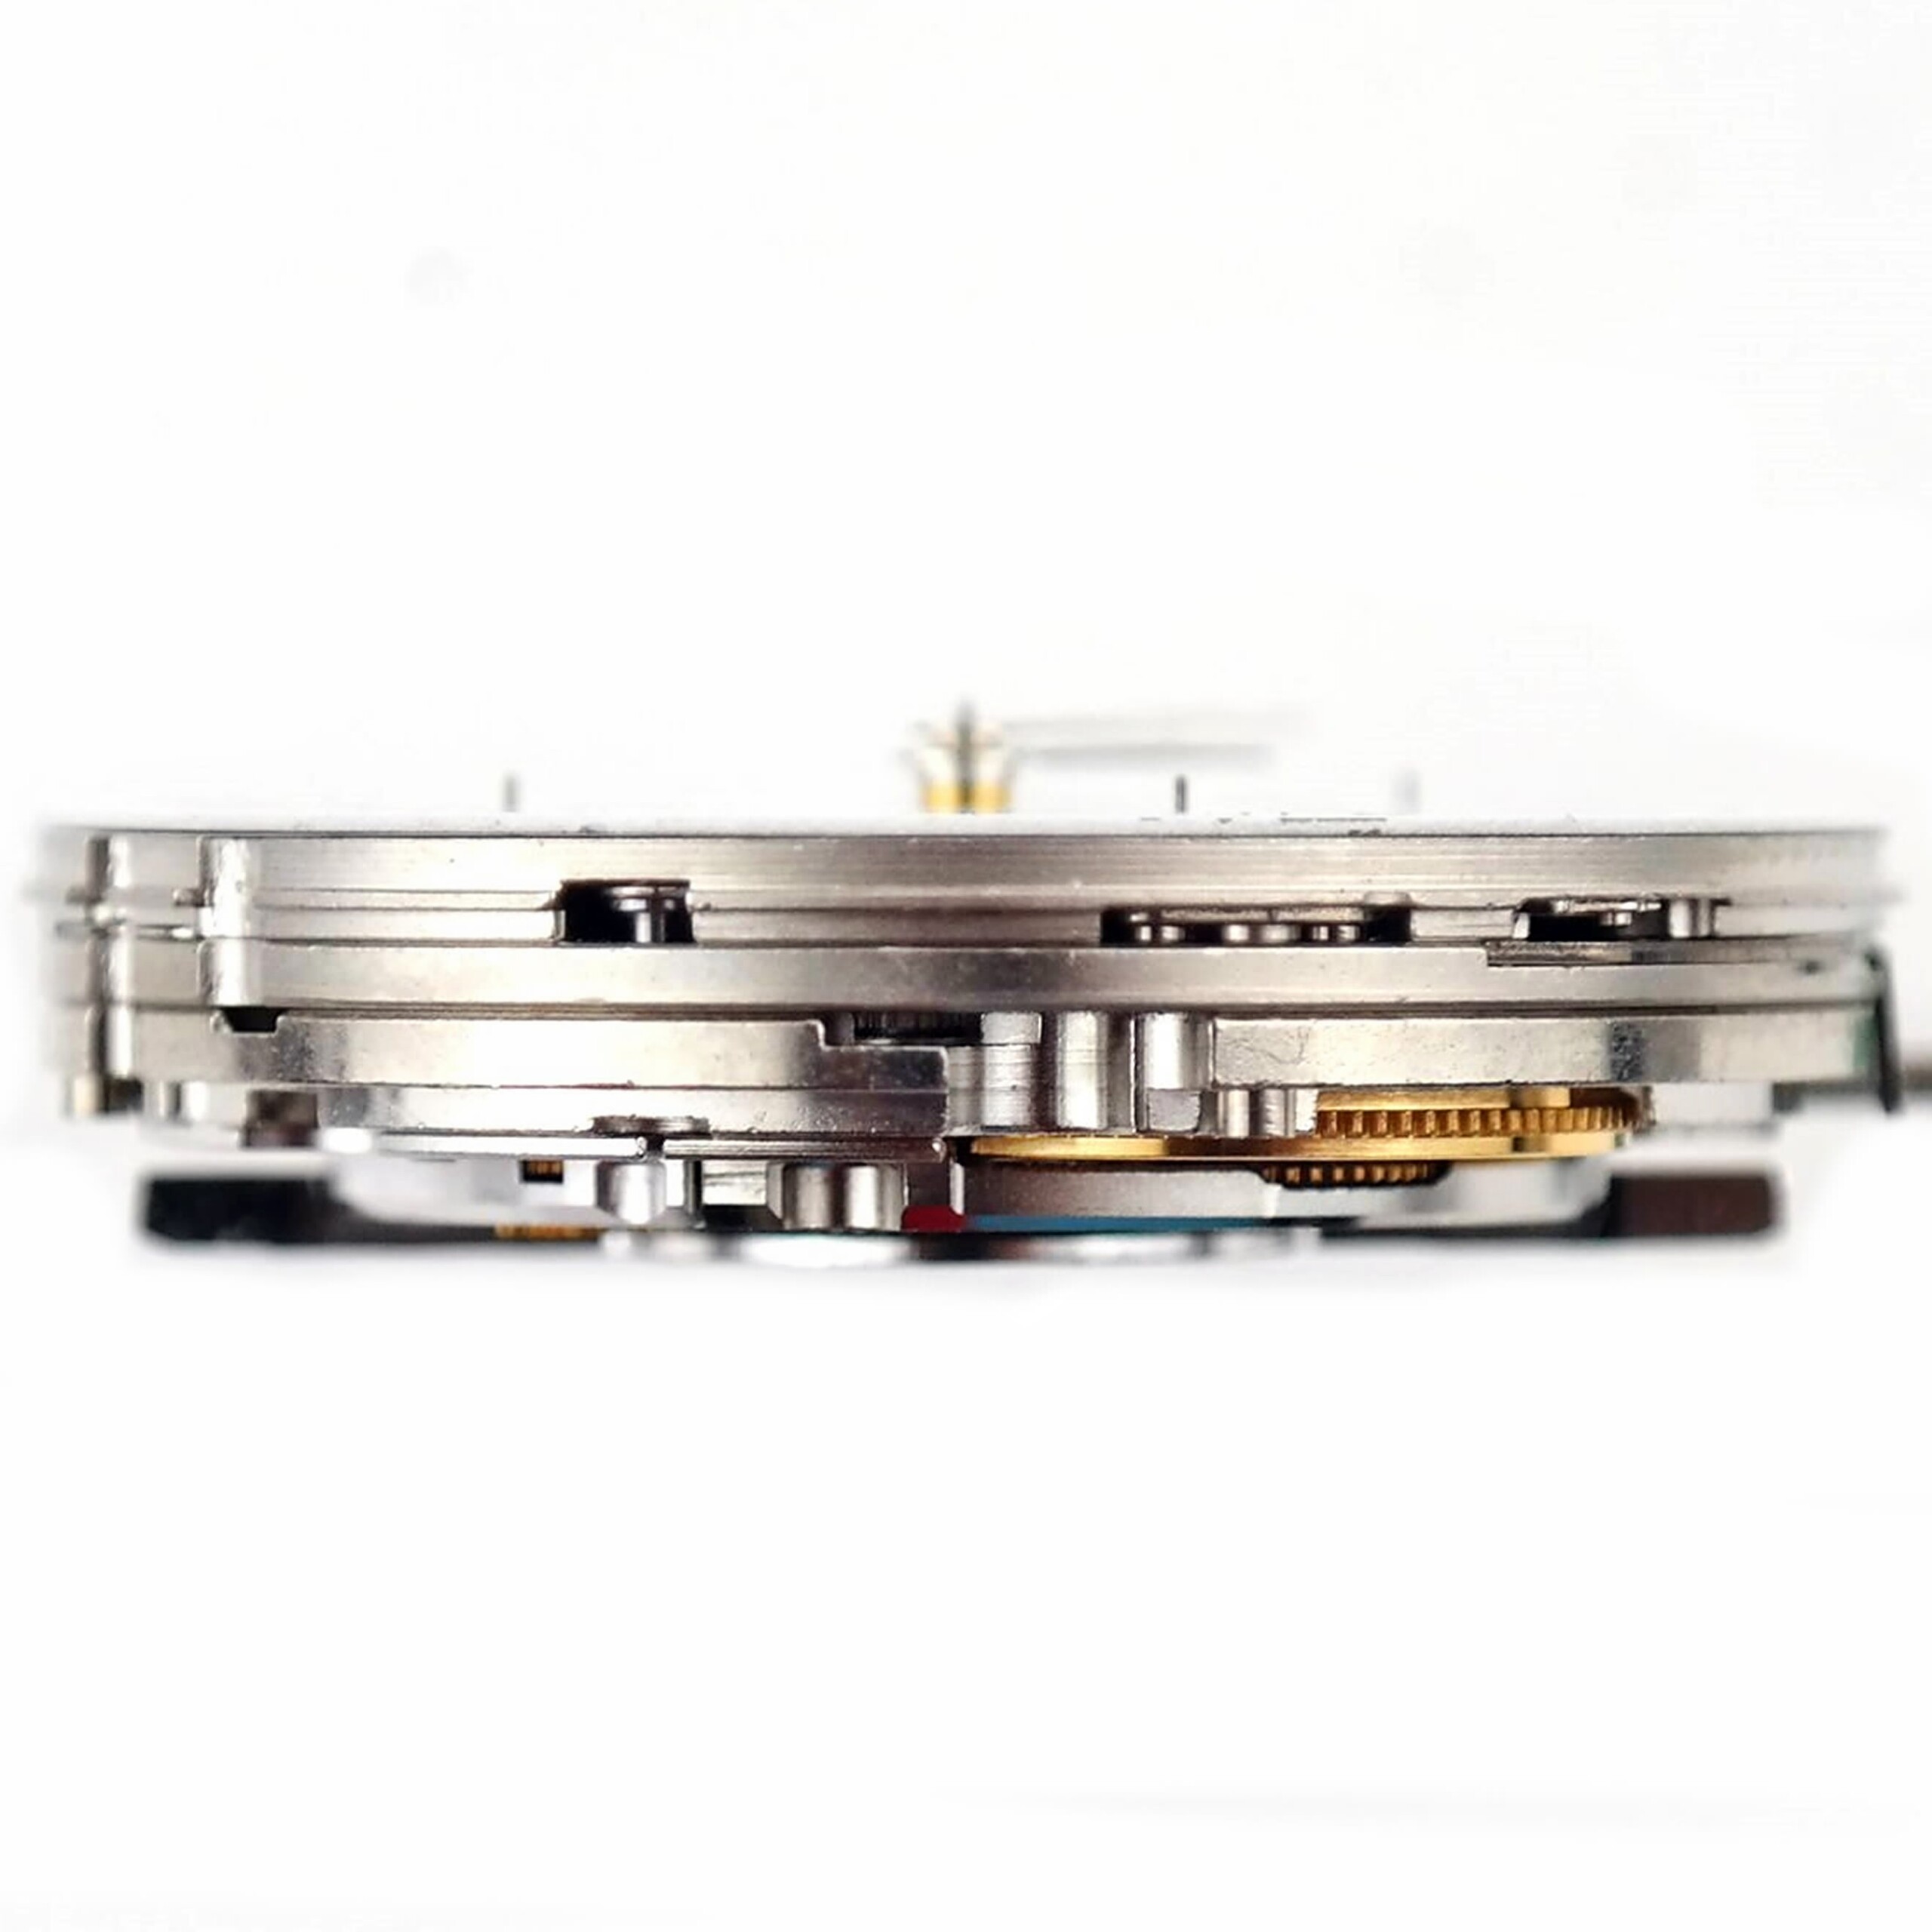 TAG Heuer Calibre 7 (Calibre 17 prototype) Automatic Chronograph Watch Movement